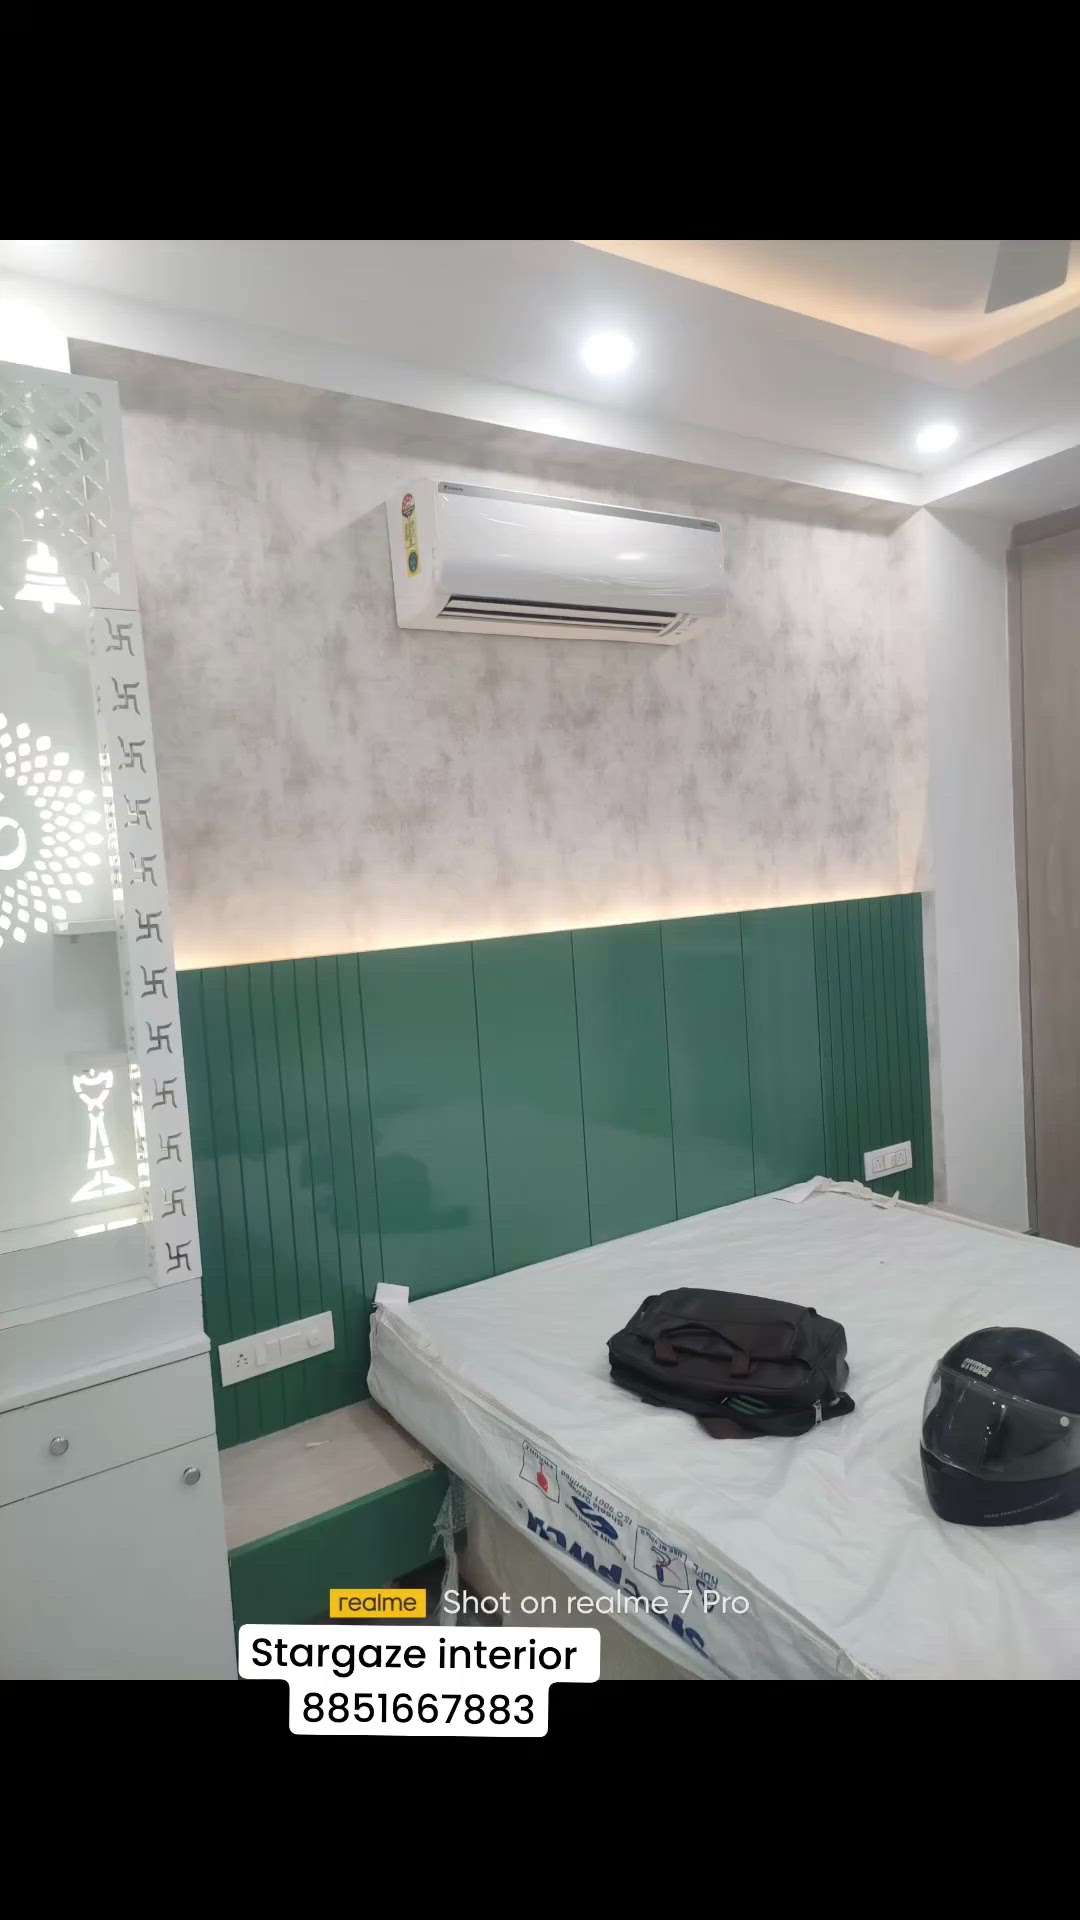 Bedroom design 
#HouseDesigns #BedroomDesigns #MasterBedroom #WallDesigns #InteriorDesigner #mandirdesign #DelhiGhaziabadNoida #InteriorDesigner #architecturedesigns #lighting